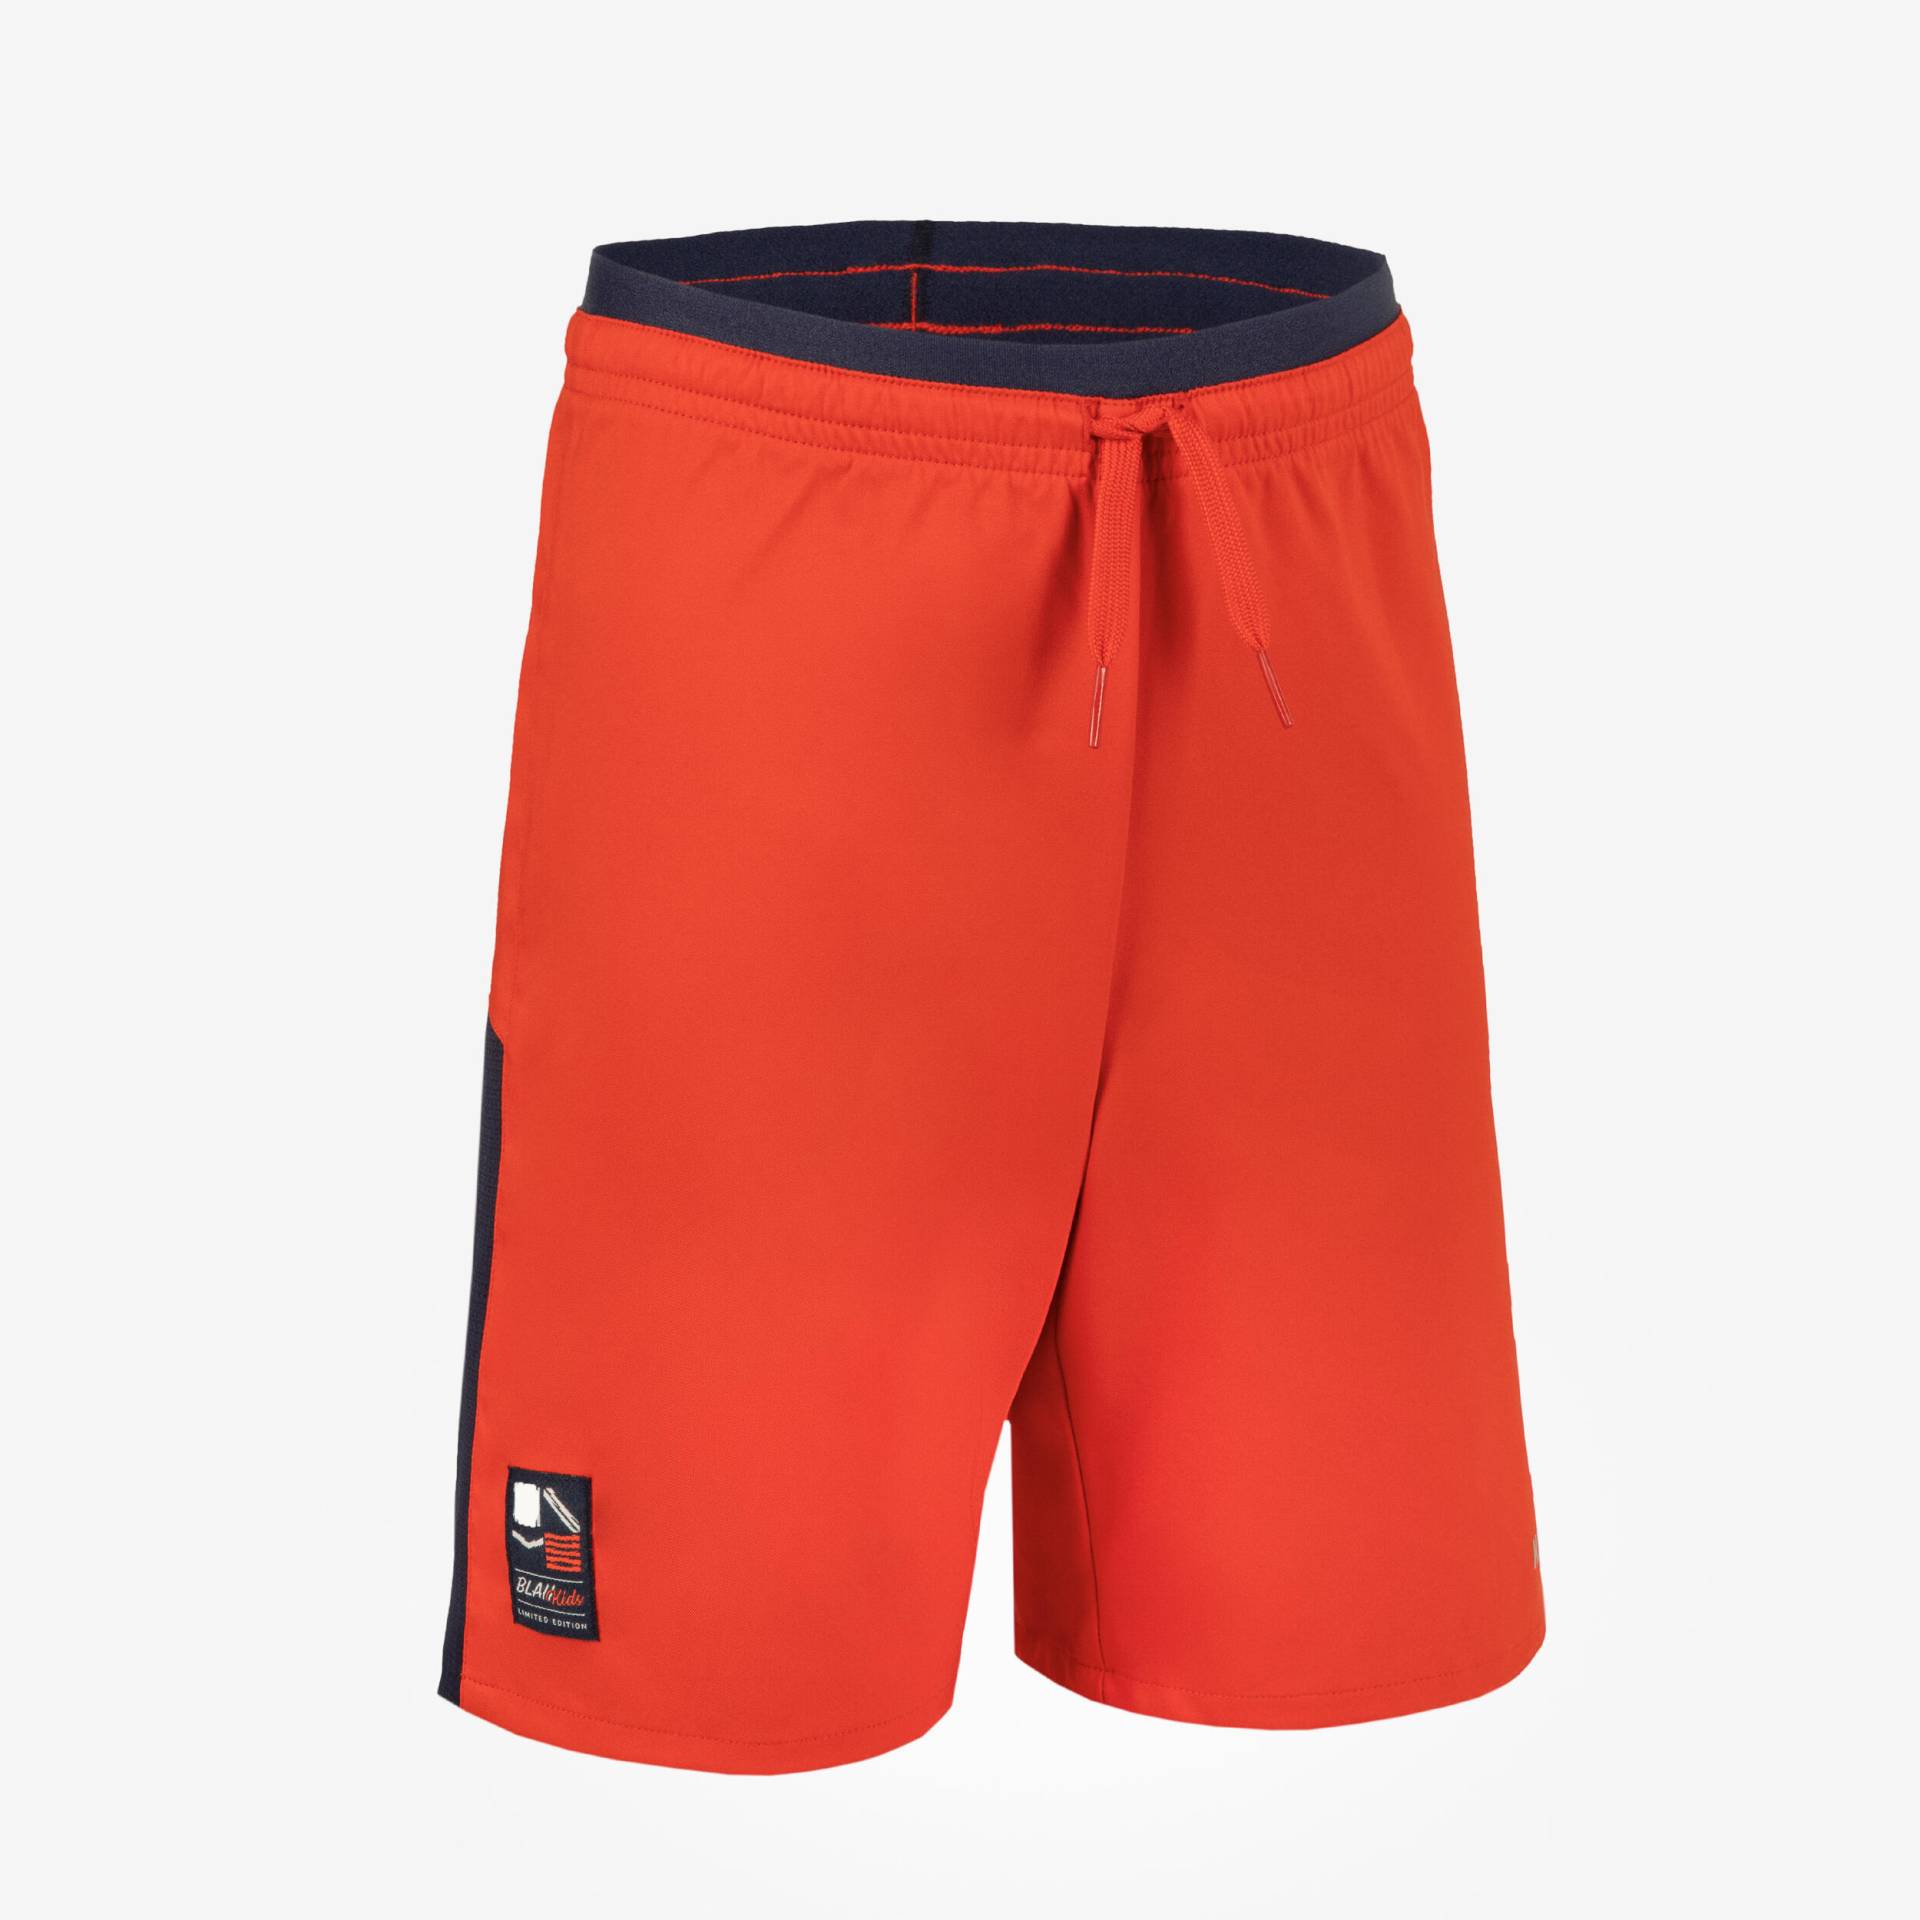 Kinder Fussball Shorts - rot/marineblau von KIPSTA